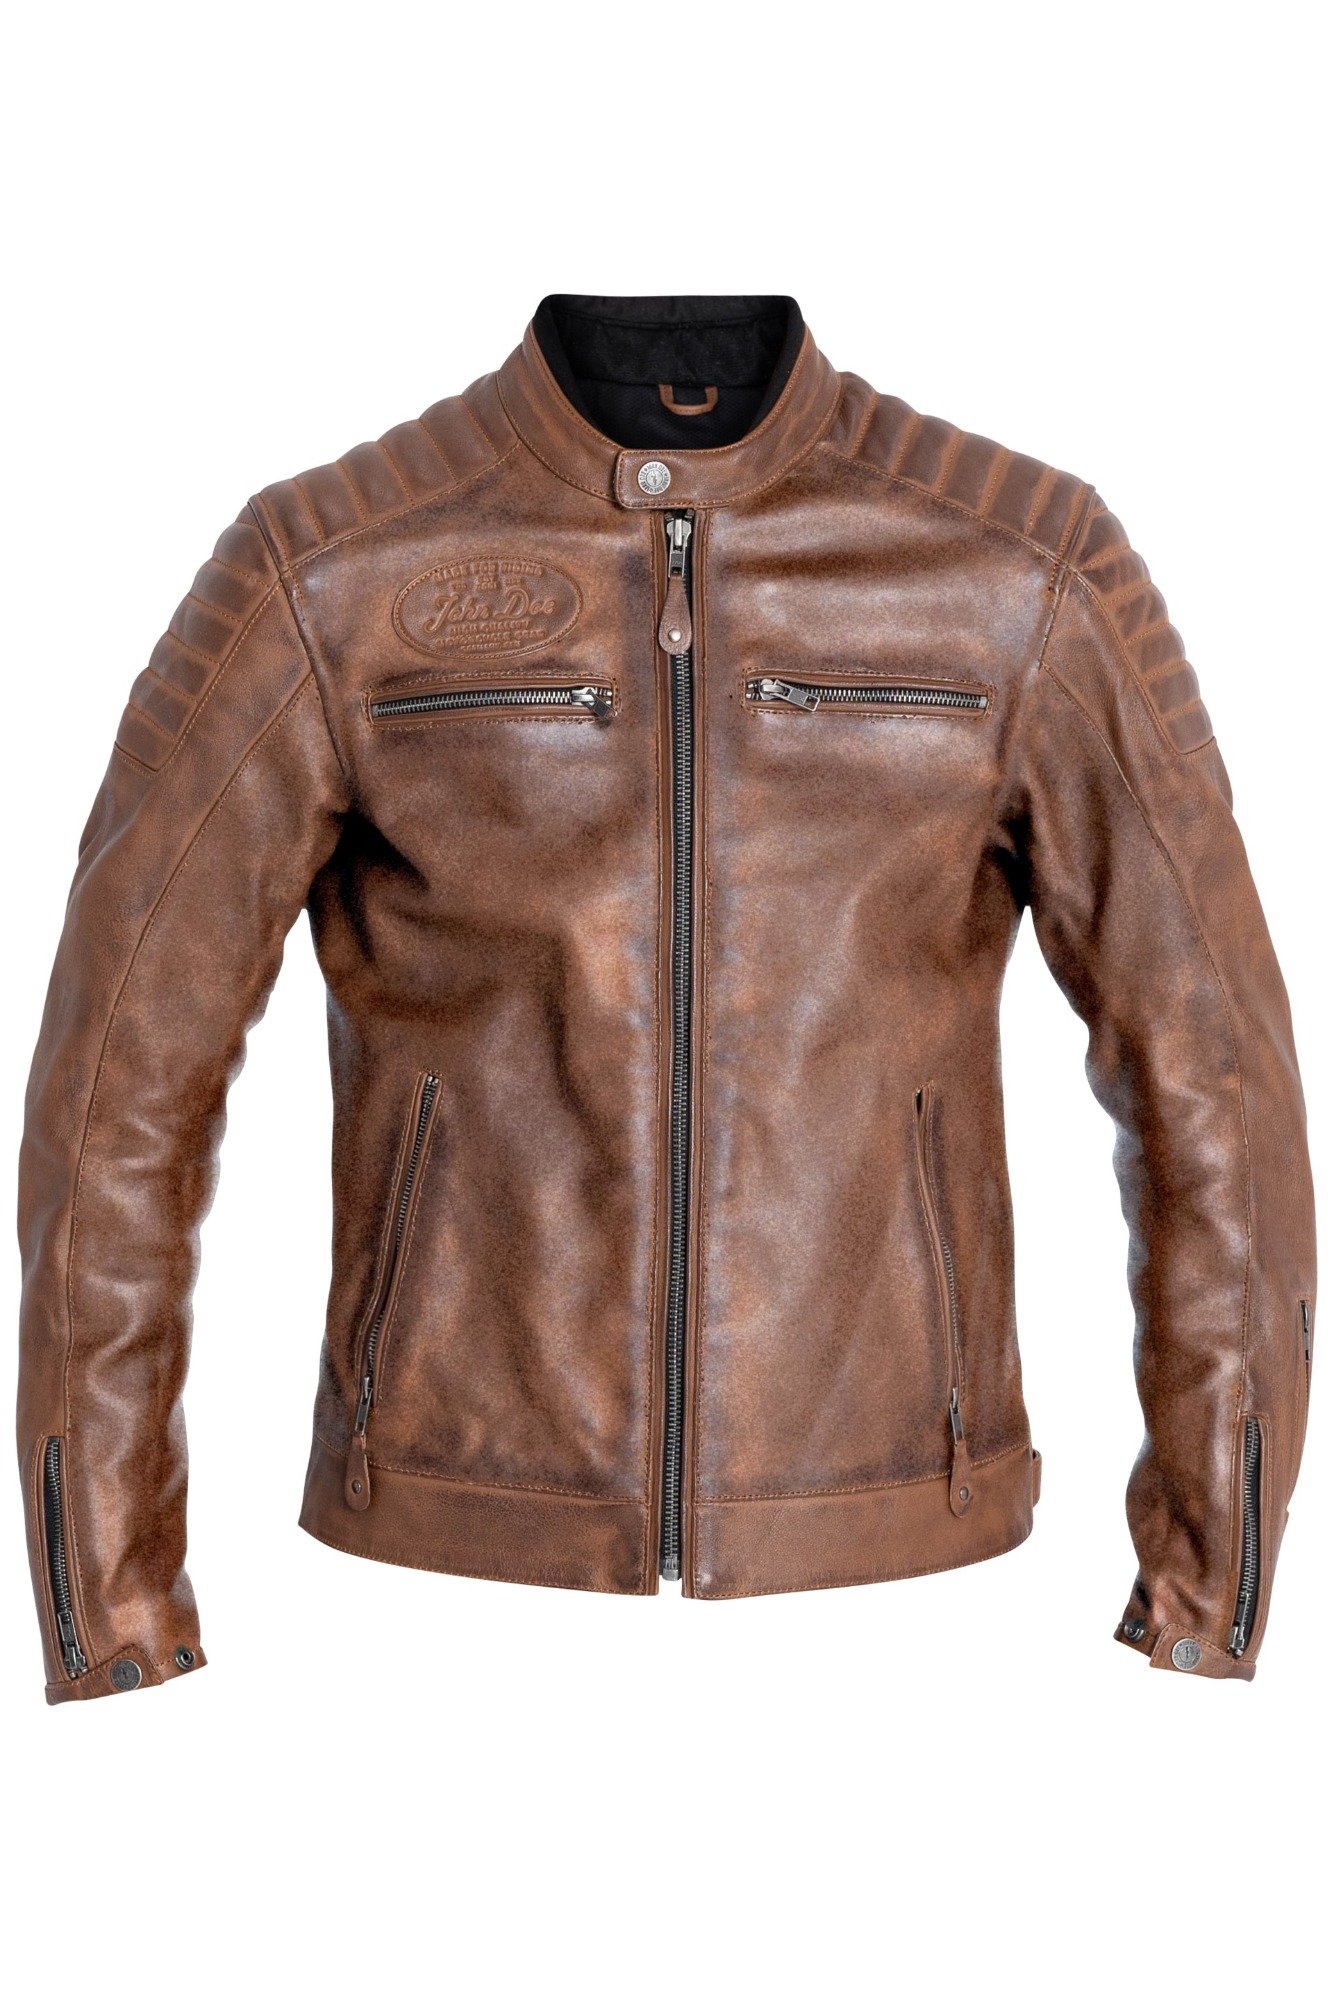 Image of John Doe Leather Dexter Jacket Brown Size S ID 4250553241849